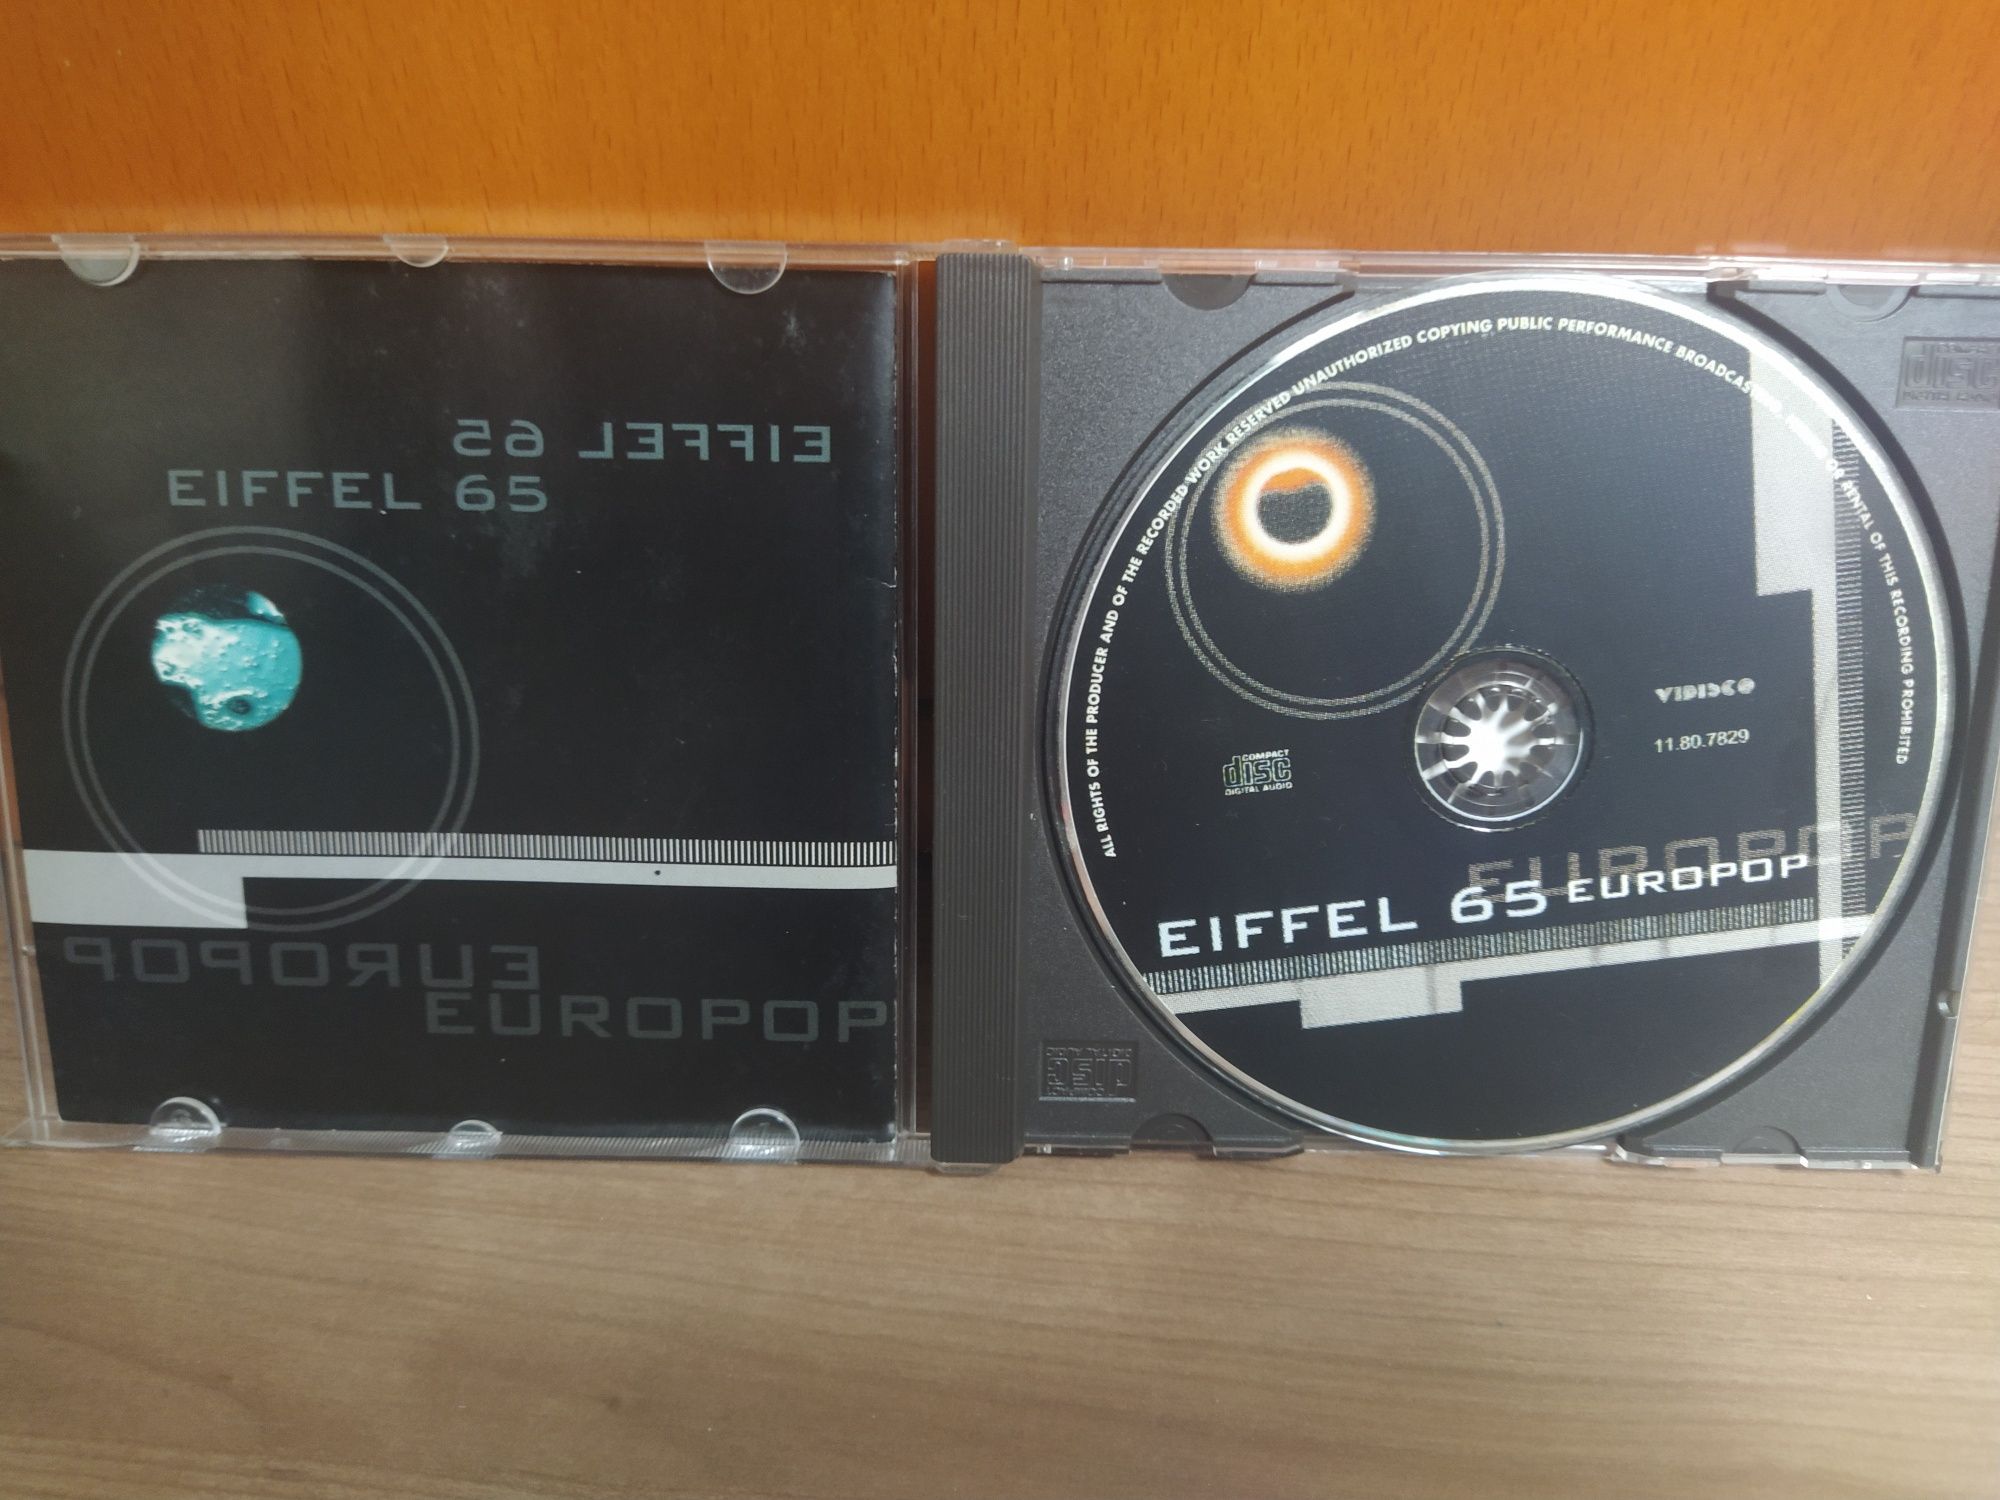 Eiffel 65 - Europop Álbum em CD